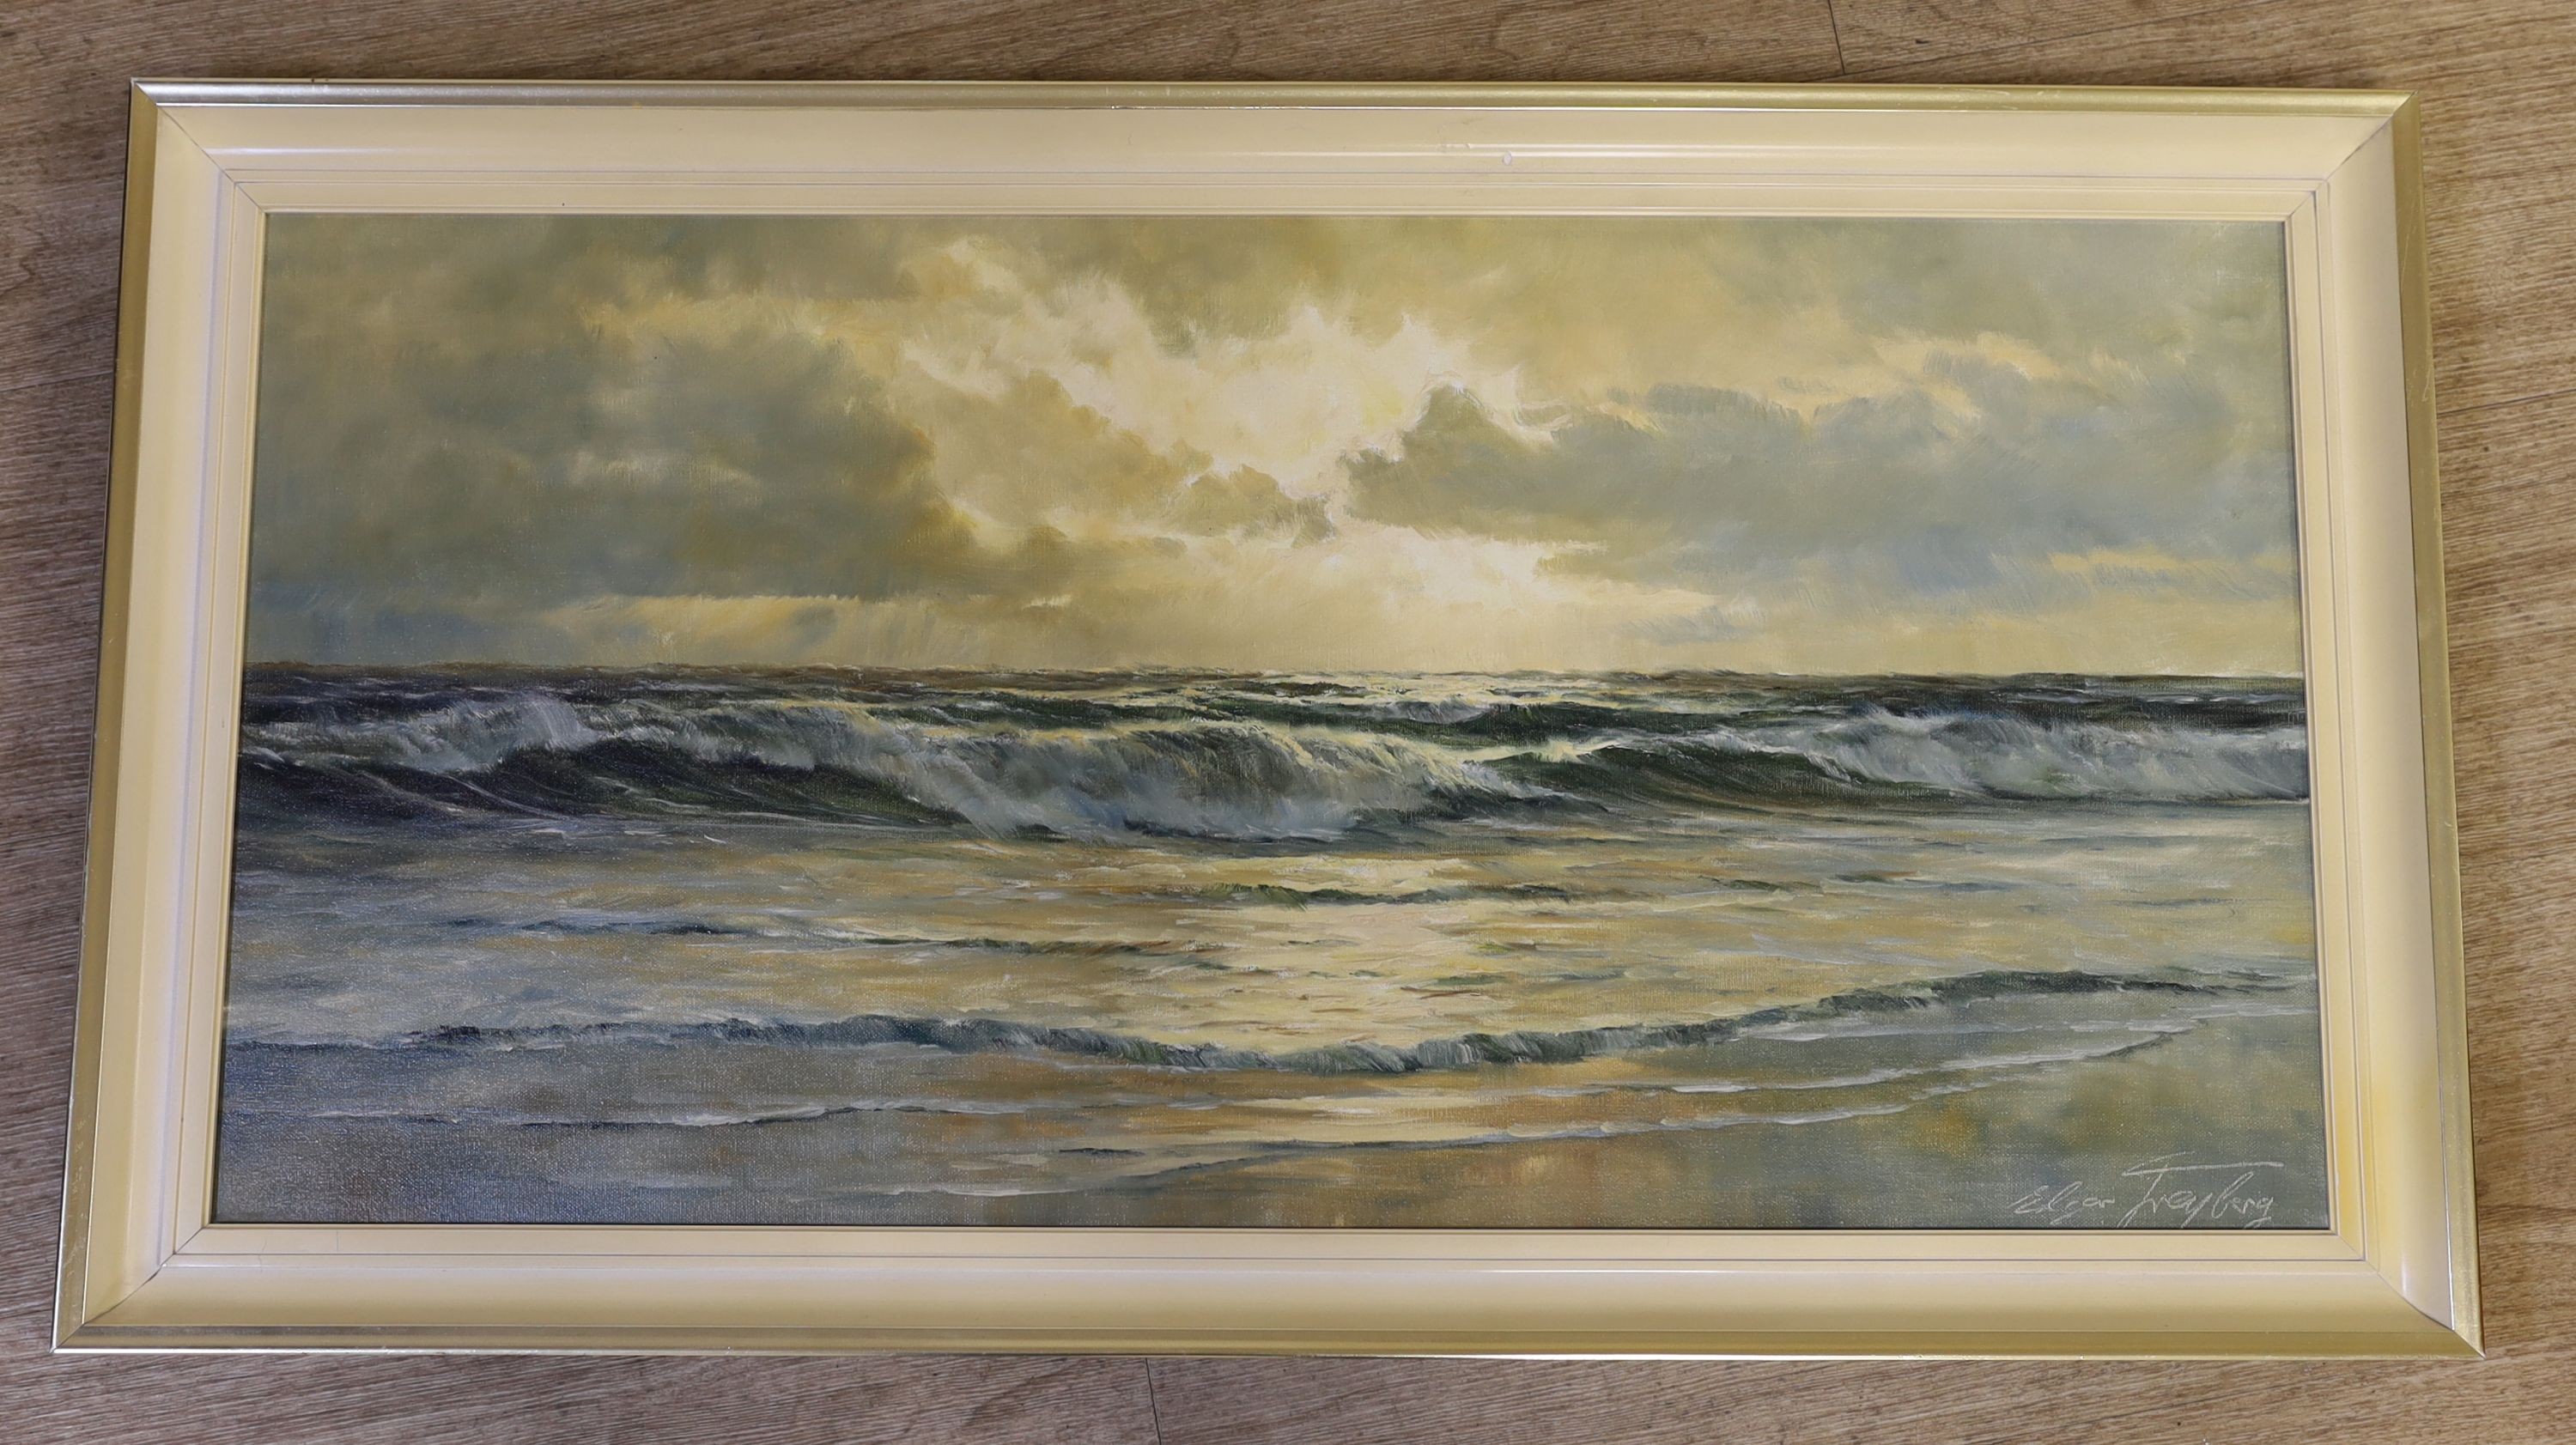 Edgar Freyberg (1927-2017), oil on canvas, Waves breaking on the shore, signed, 40 x 80cm